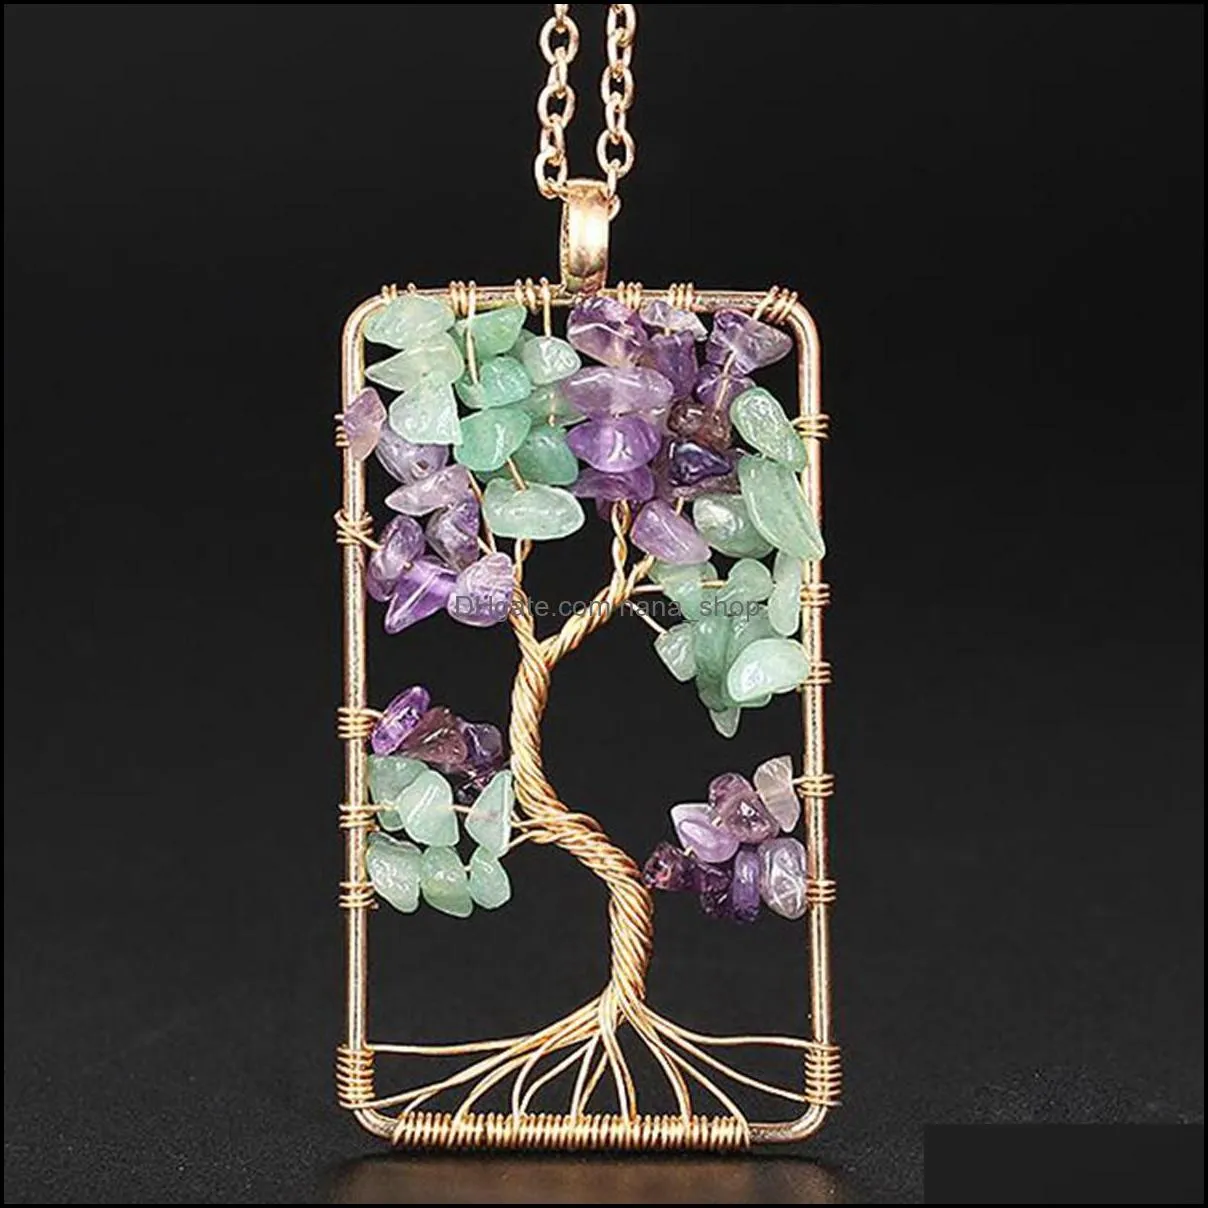 rectangle winding tree of life pendant necklace handmade amethyst+green aventurine stones chakra jewelry for women and men